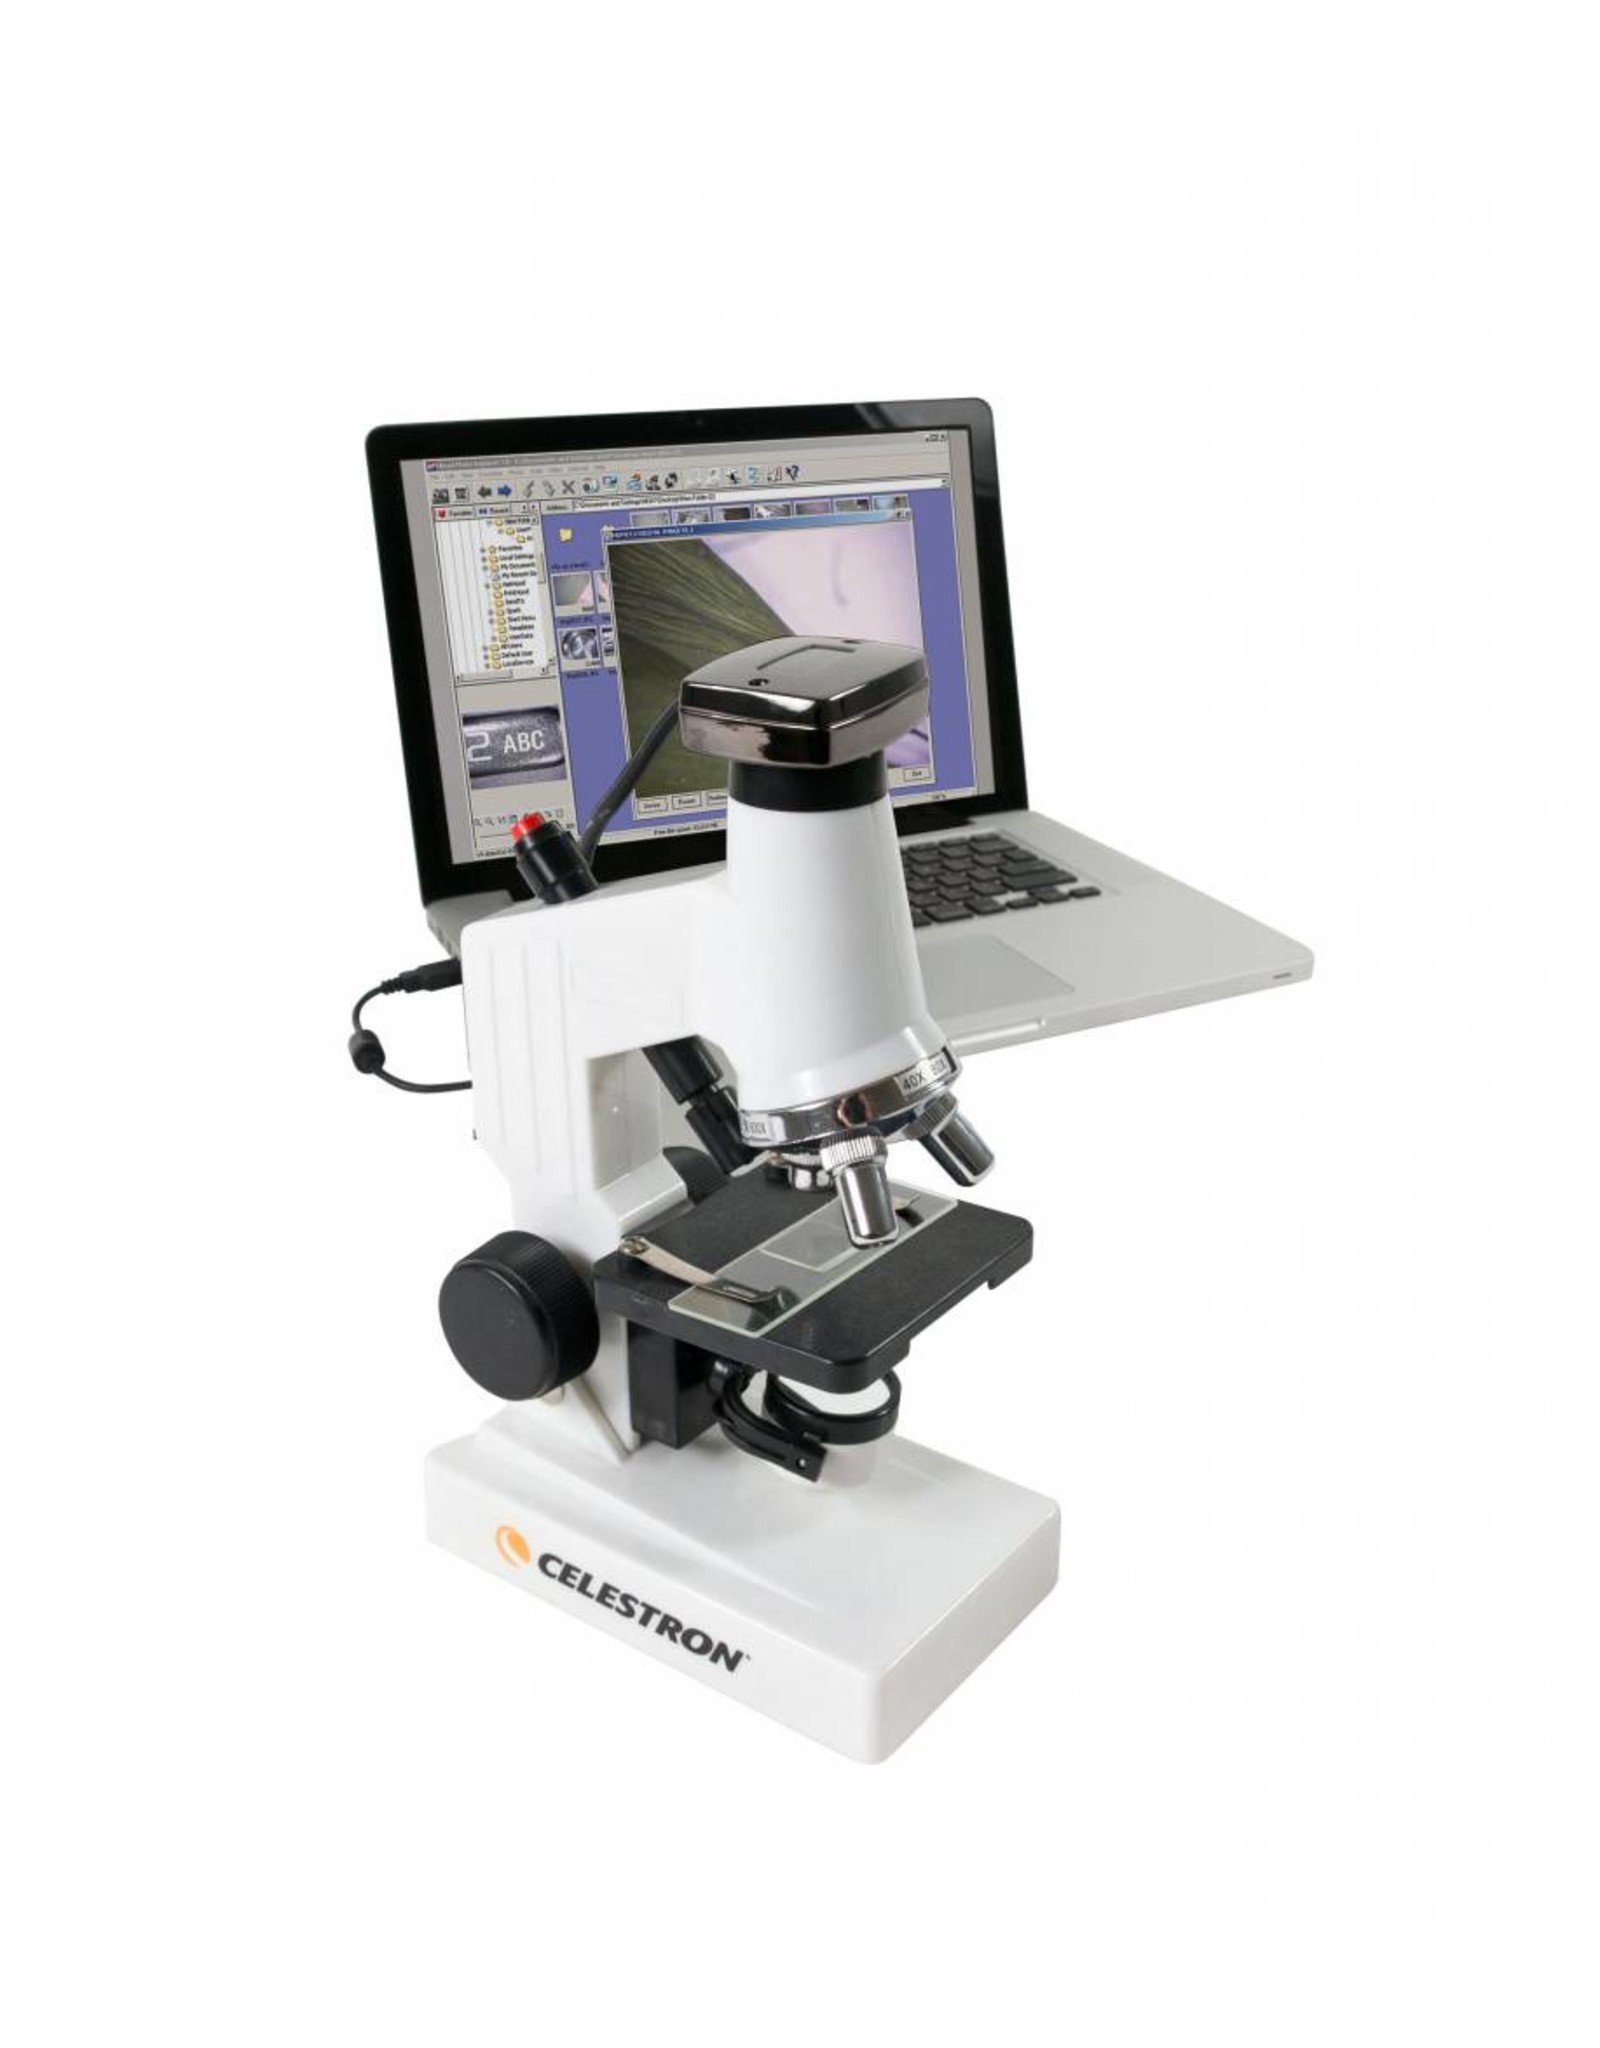 Celestron 5 MP Handheld Digital Microscope Pro並行輸入-